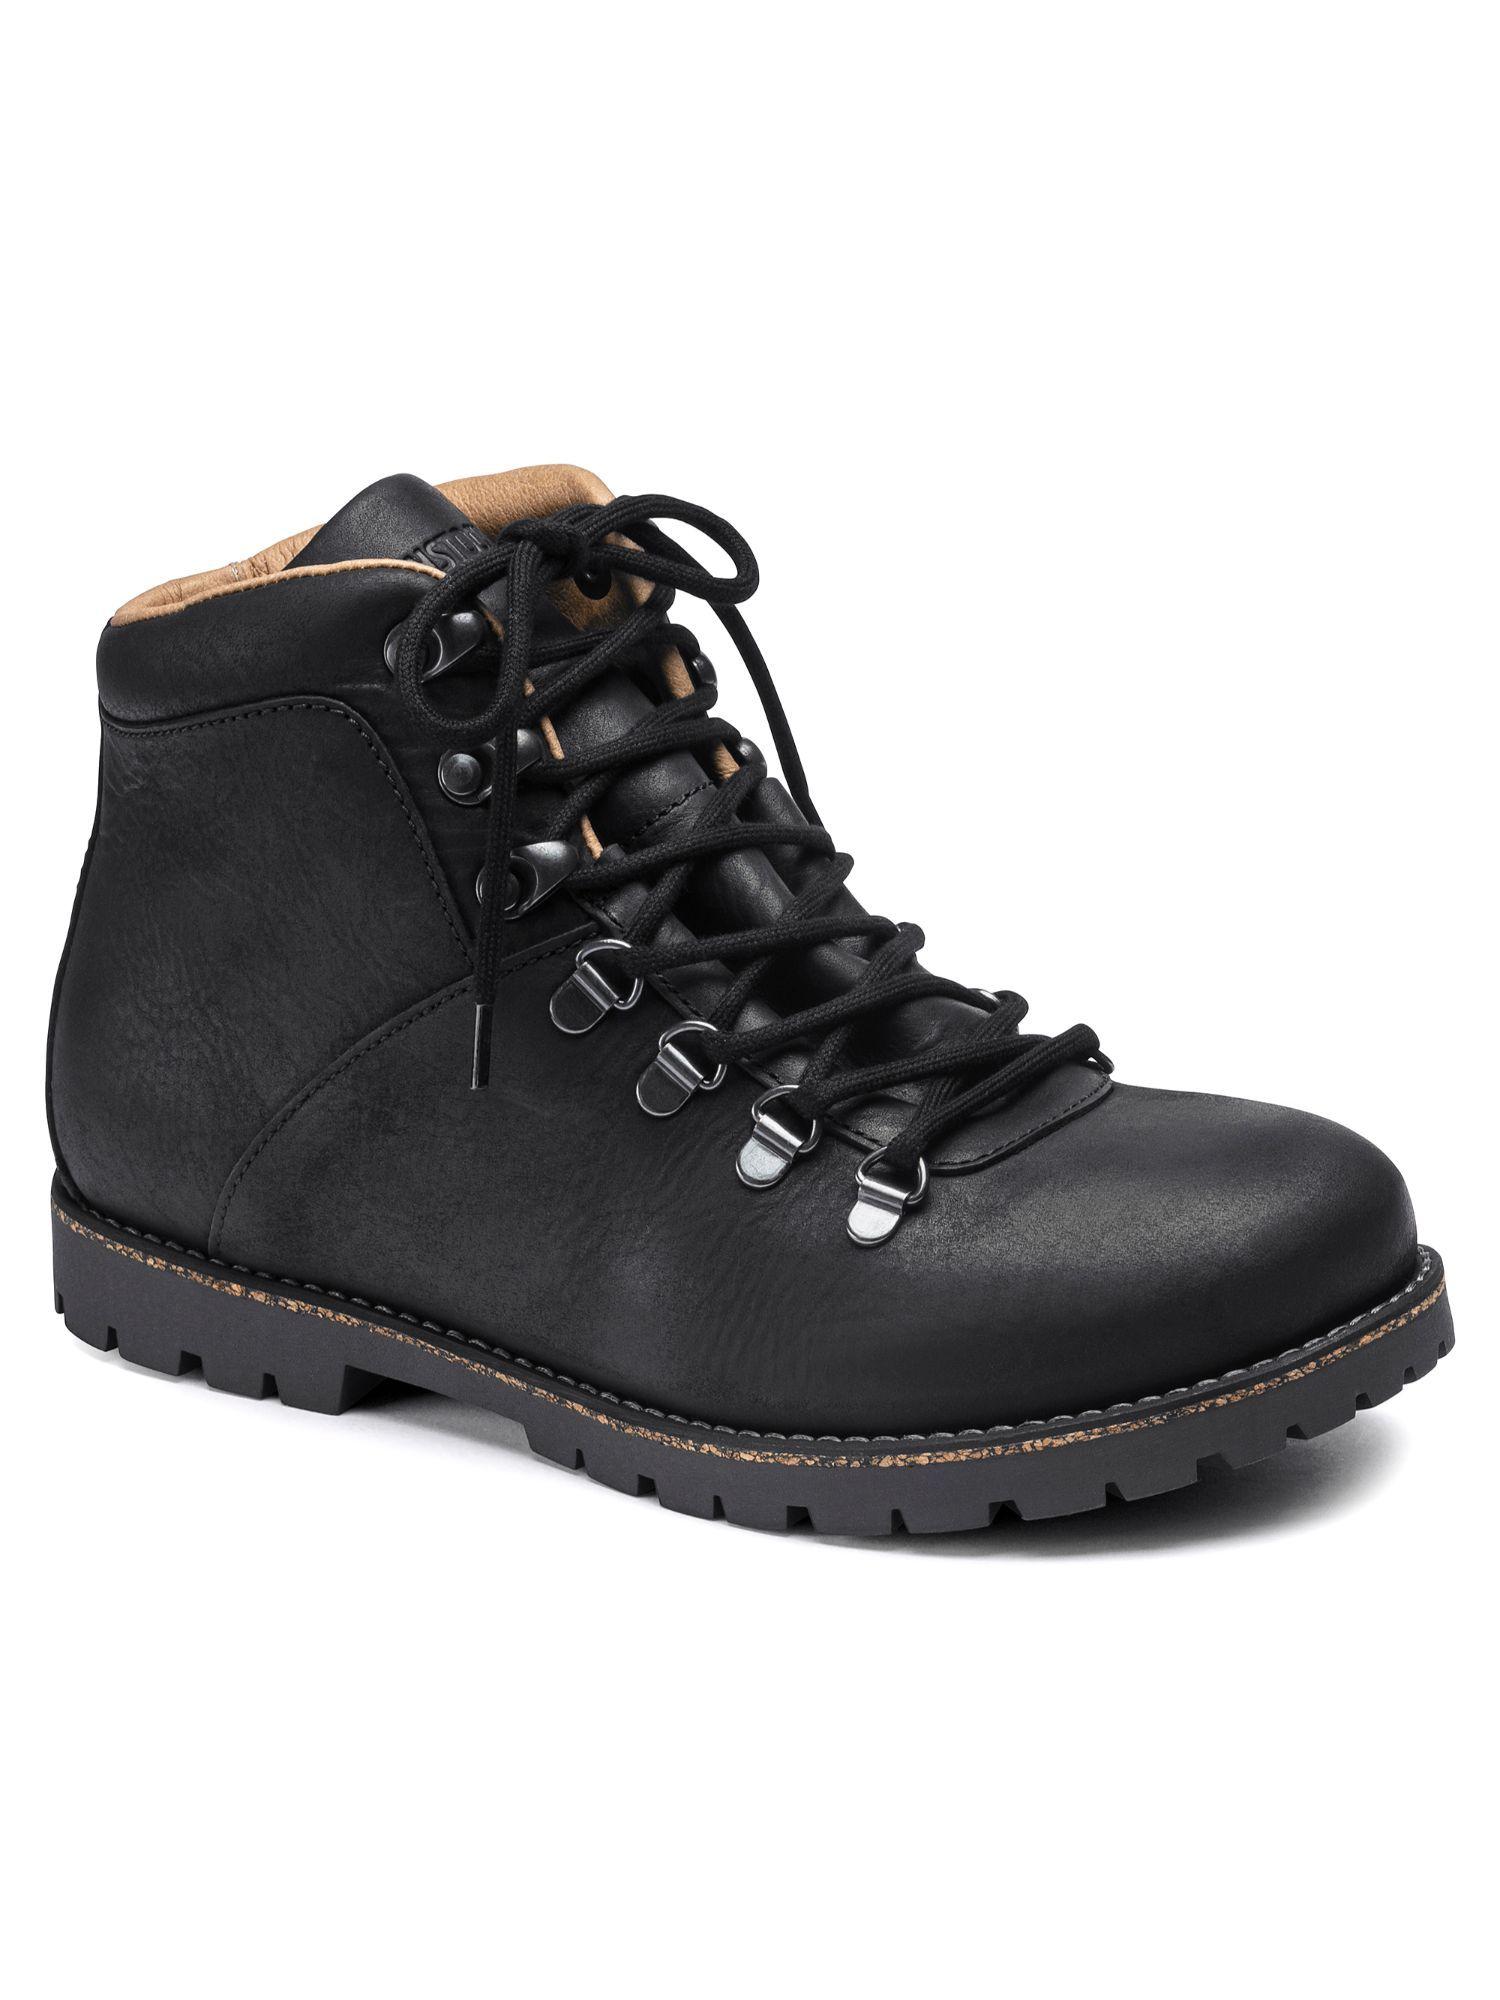 jackson nubuck leather black flat boots